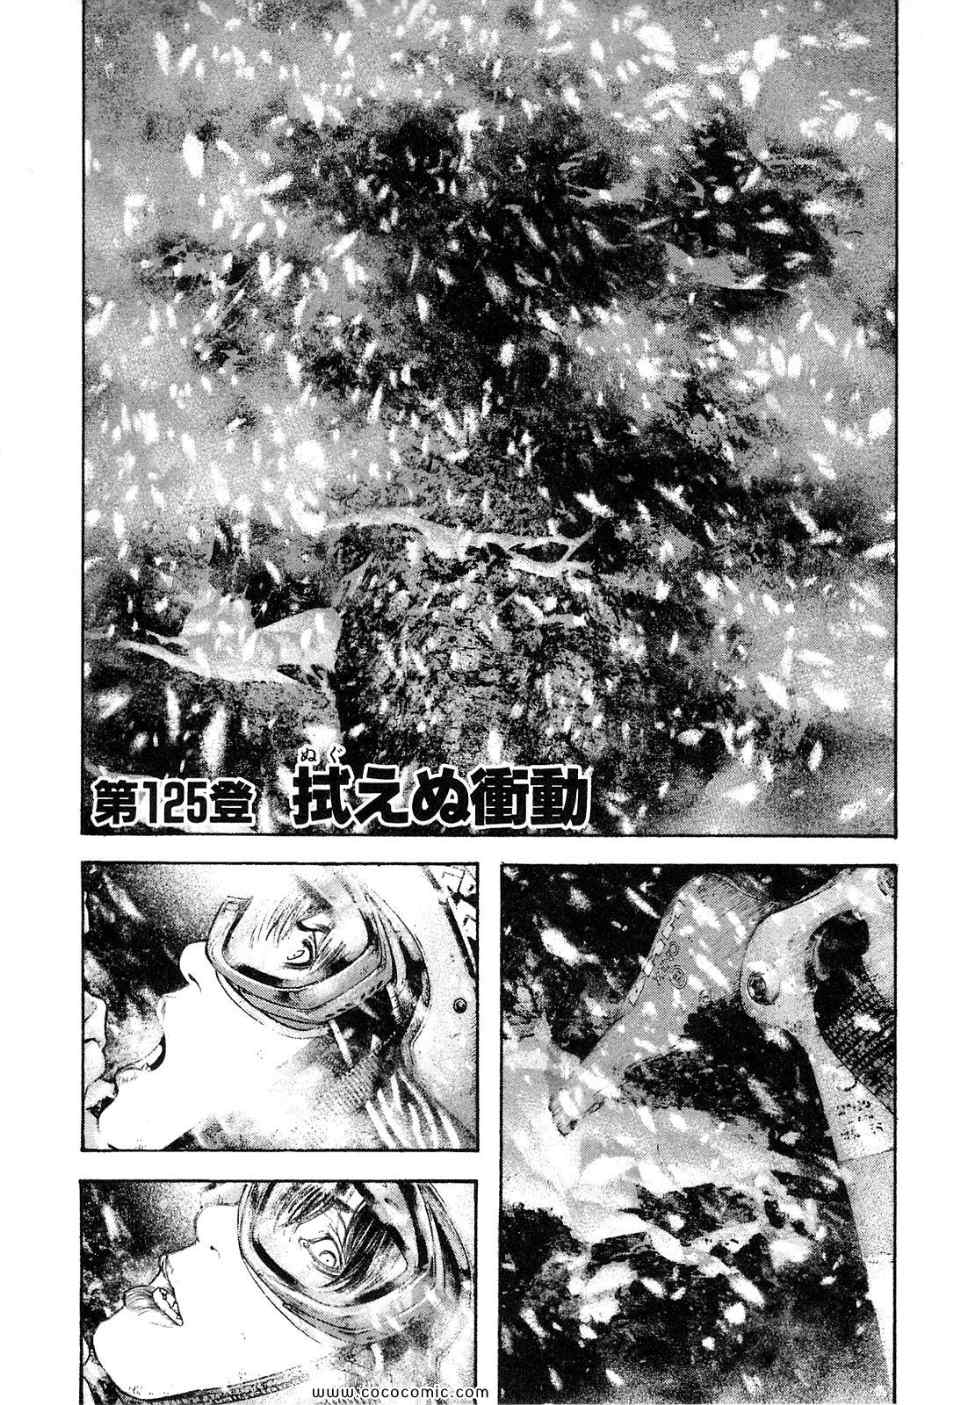 《孤高の人(日文)》漫画 孤高の人 13集